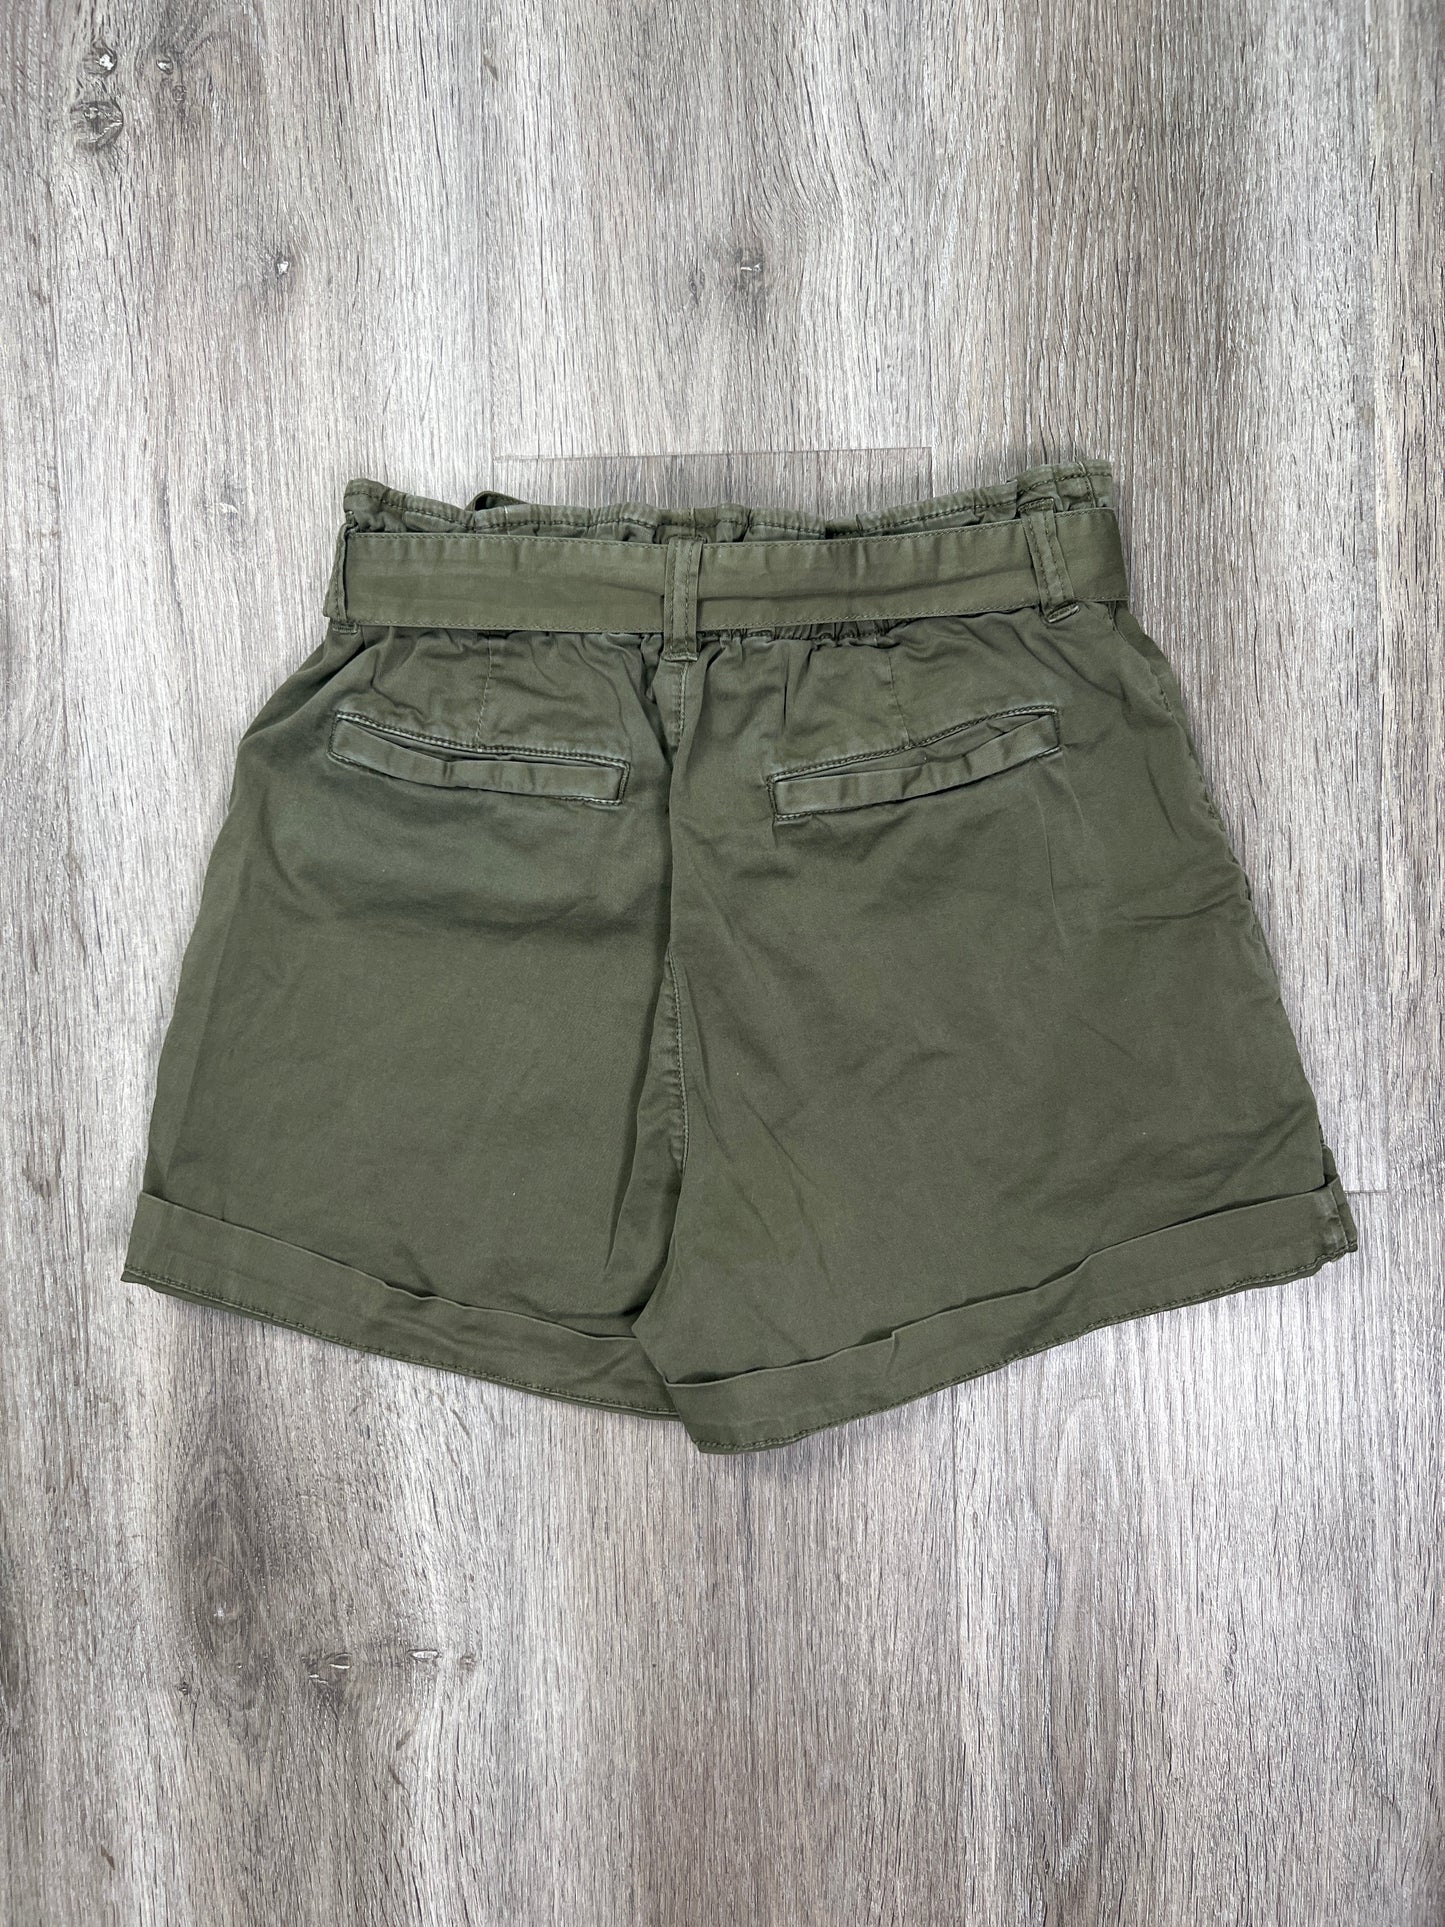 Green Shorts Sanctuary, Size Xs